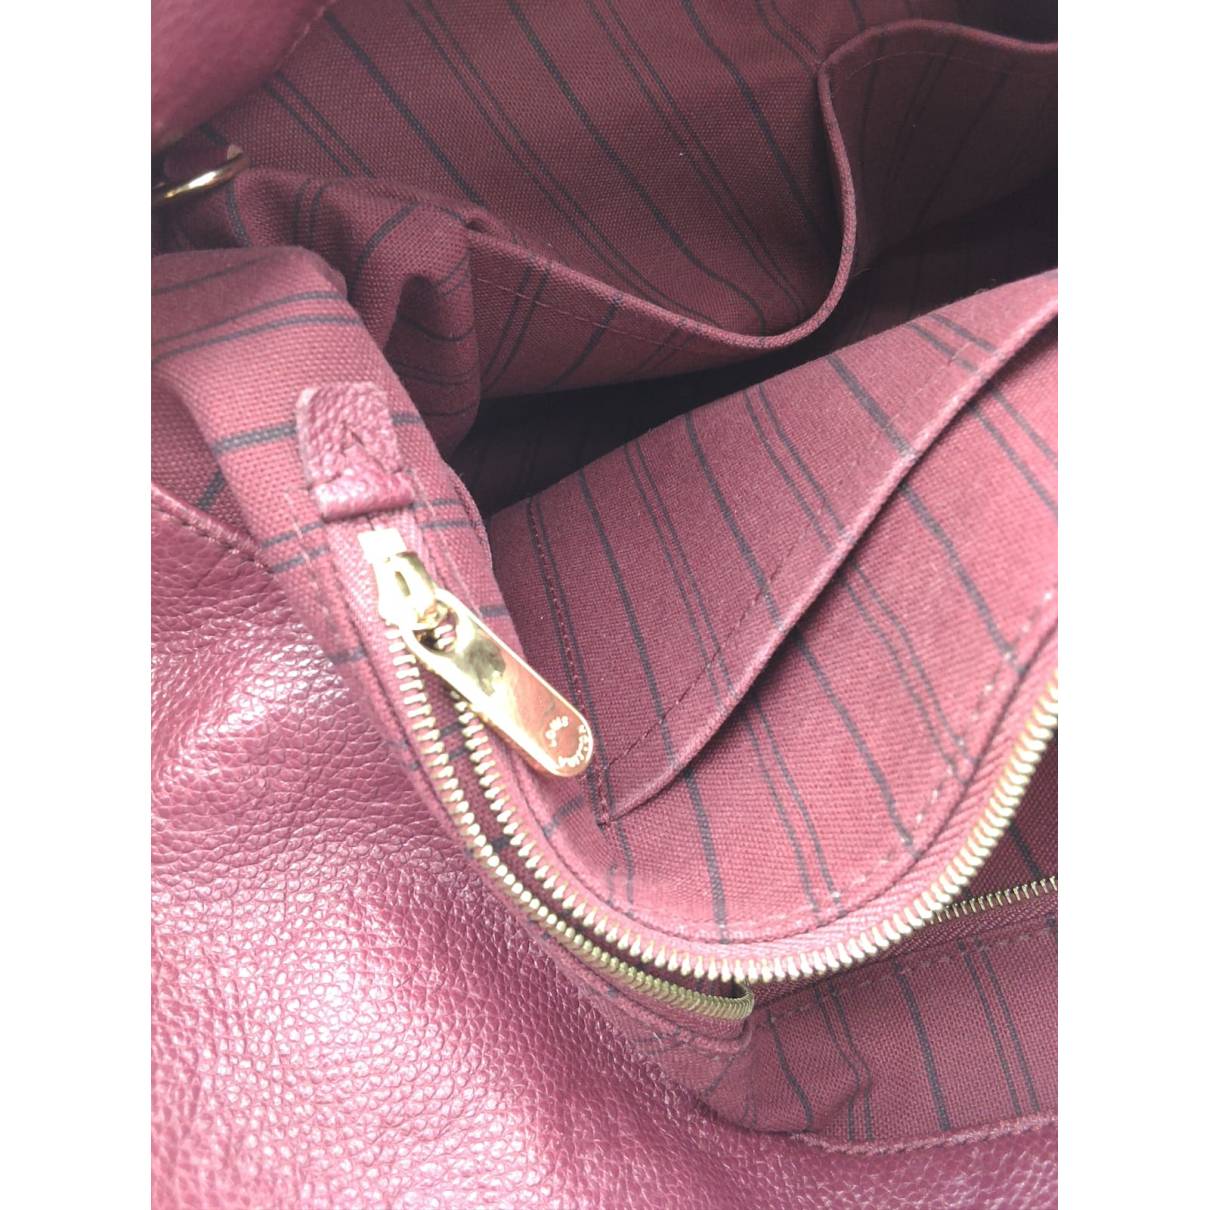 Artsy leather handbag Louis Vuitton Burgundy in Leather - 36021955